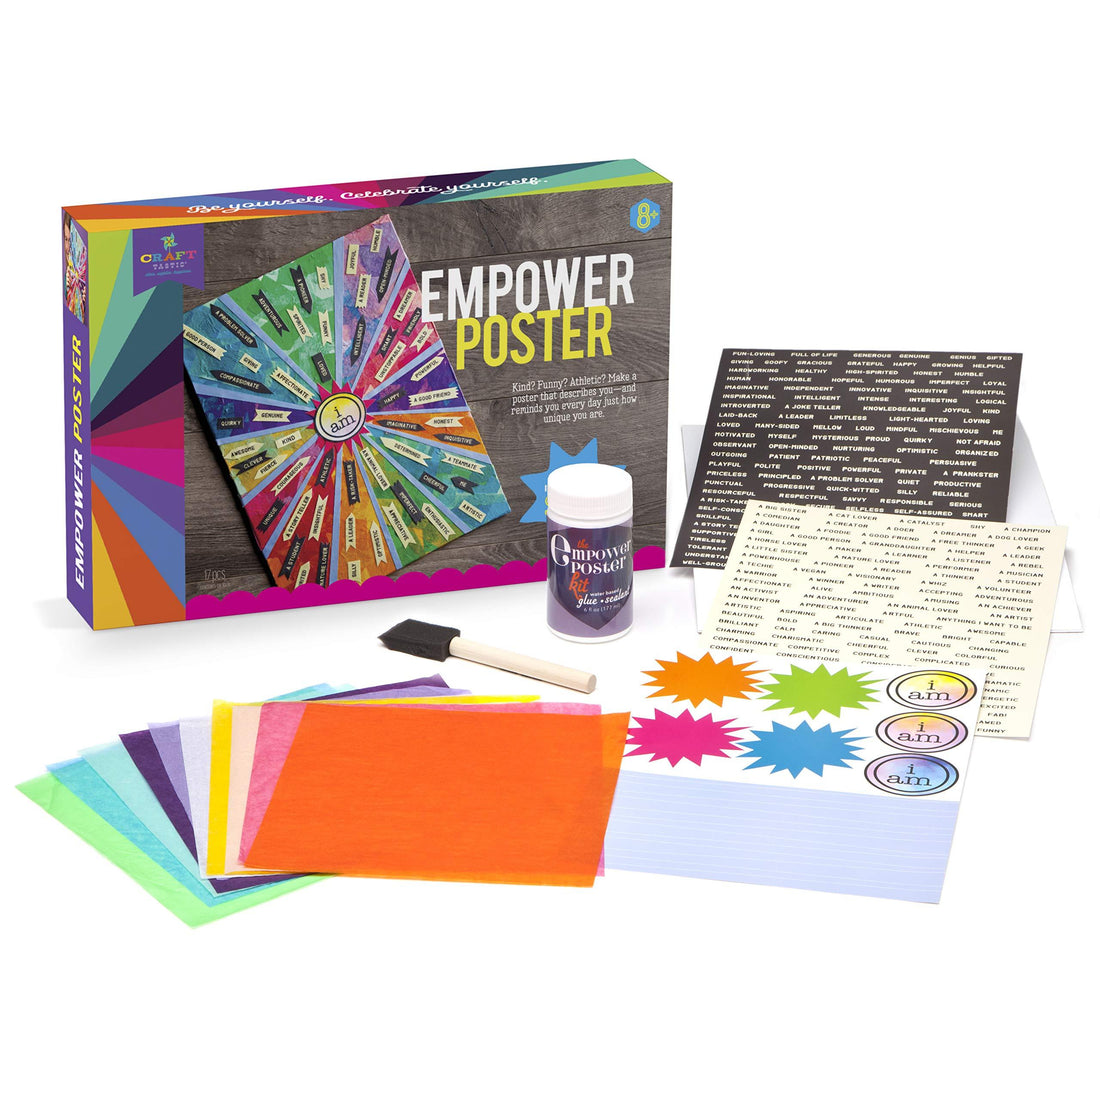 Empower Poster - Craft Kit - Kitty Hawk Kites Online Store